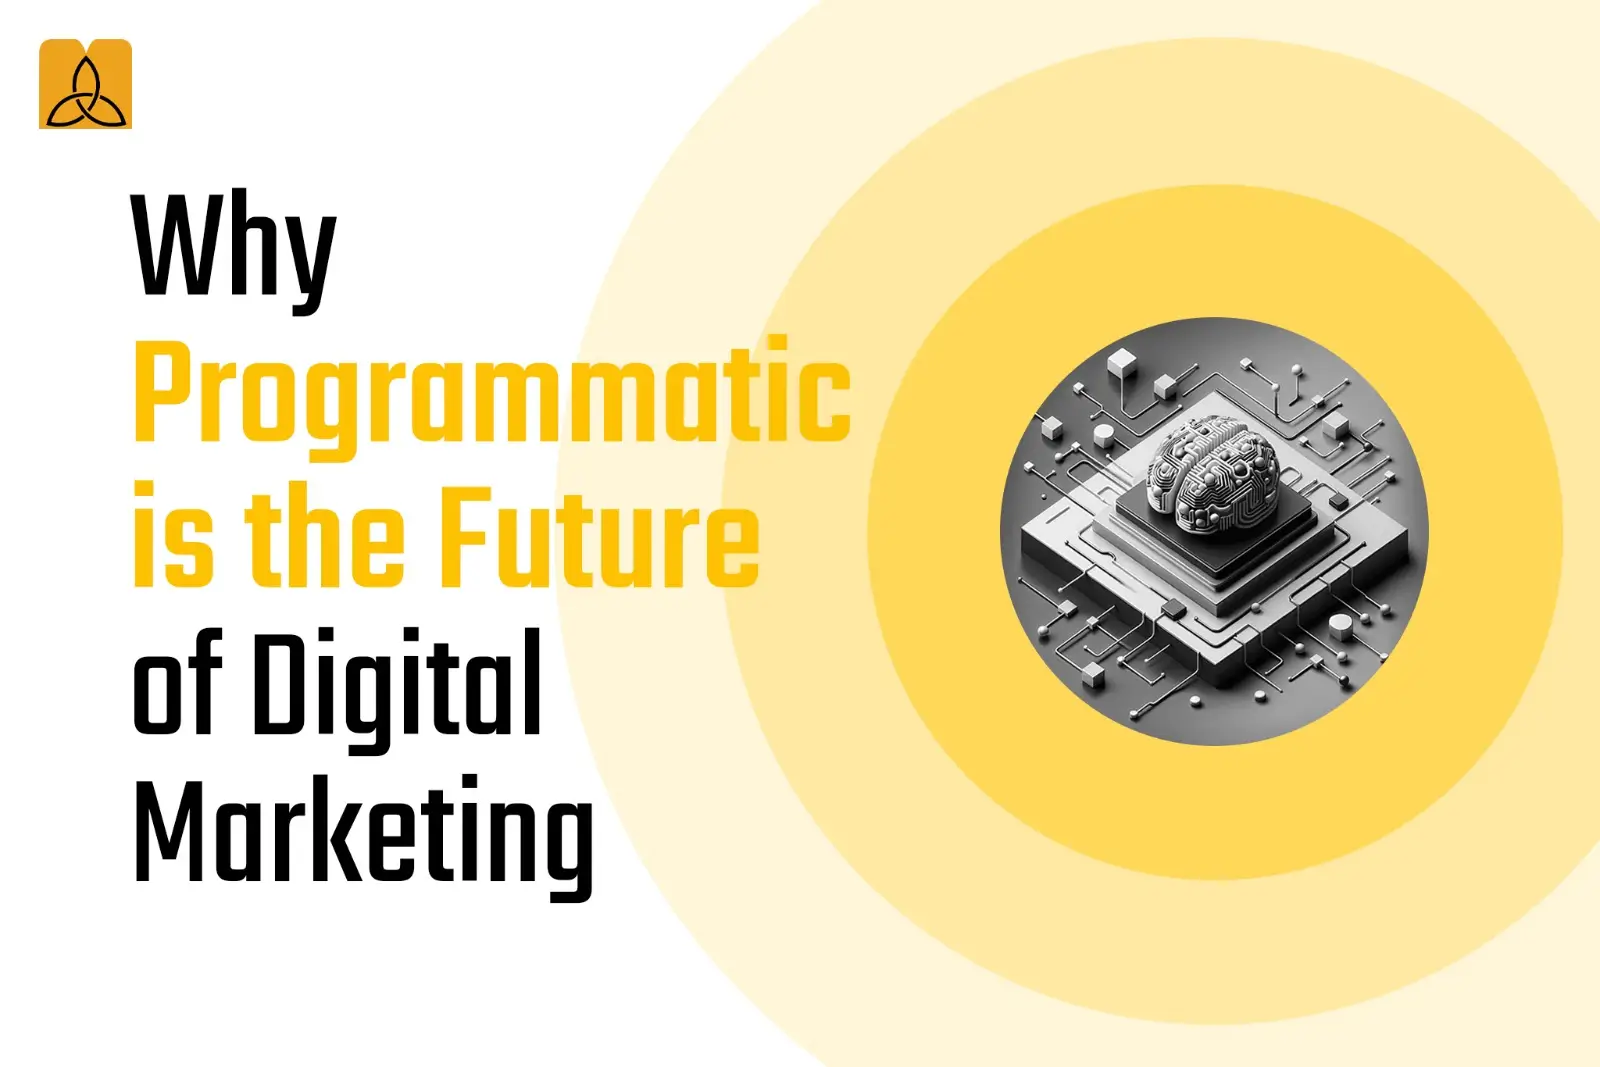 Programmatic is the Future of Digital Marketing